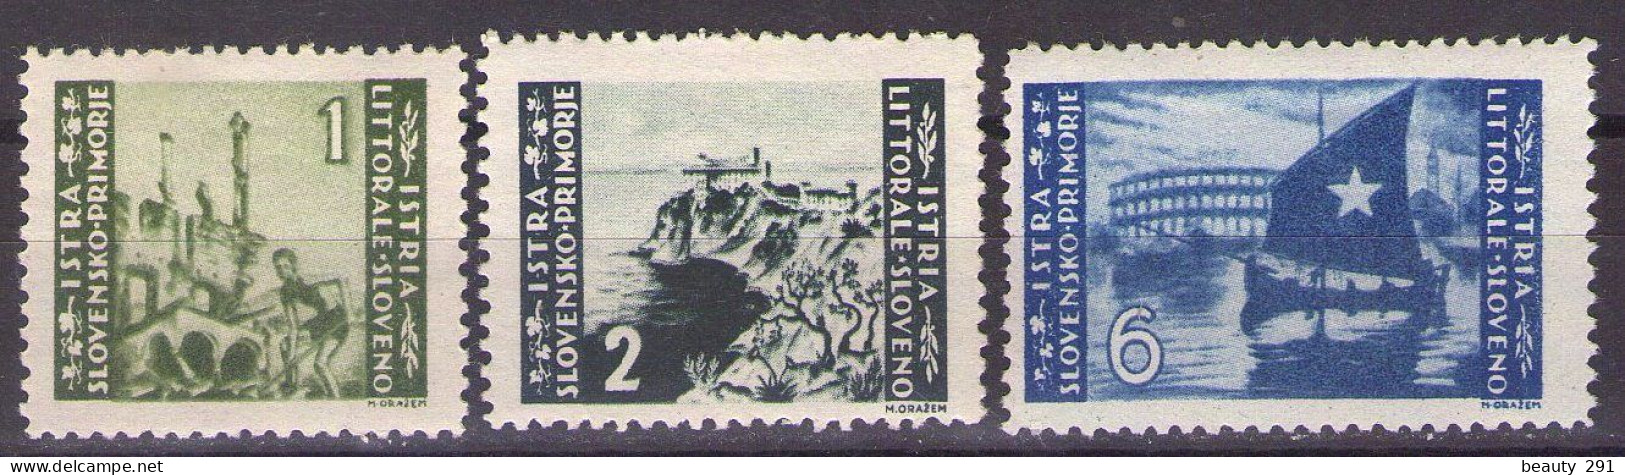 ISTRIA E LITORALE SLOVENO 1946. Tiratura Di Belgrado, Dent. 11-1/2, Sass. 63,64,66  MH* - Yugoslavian Occ.: Slovenian Shore